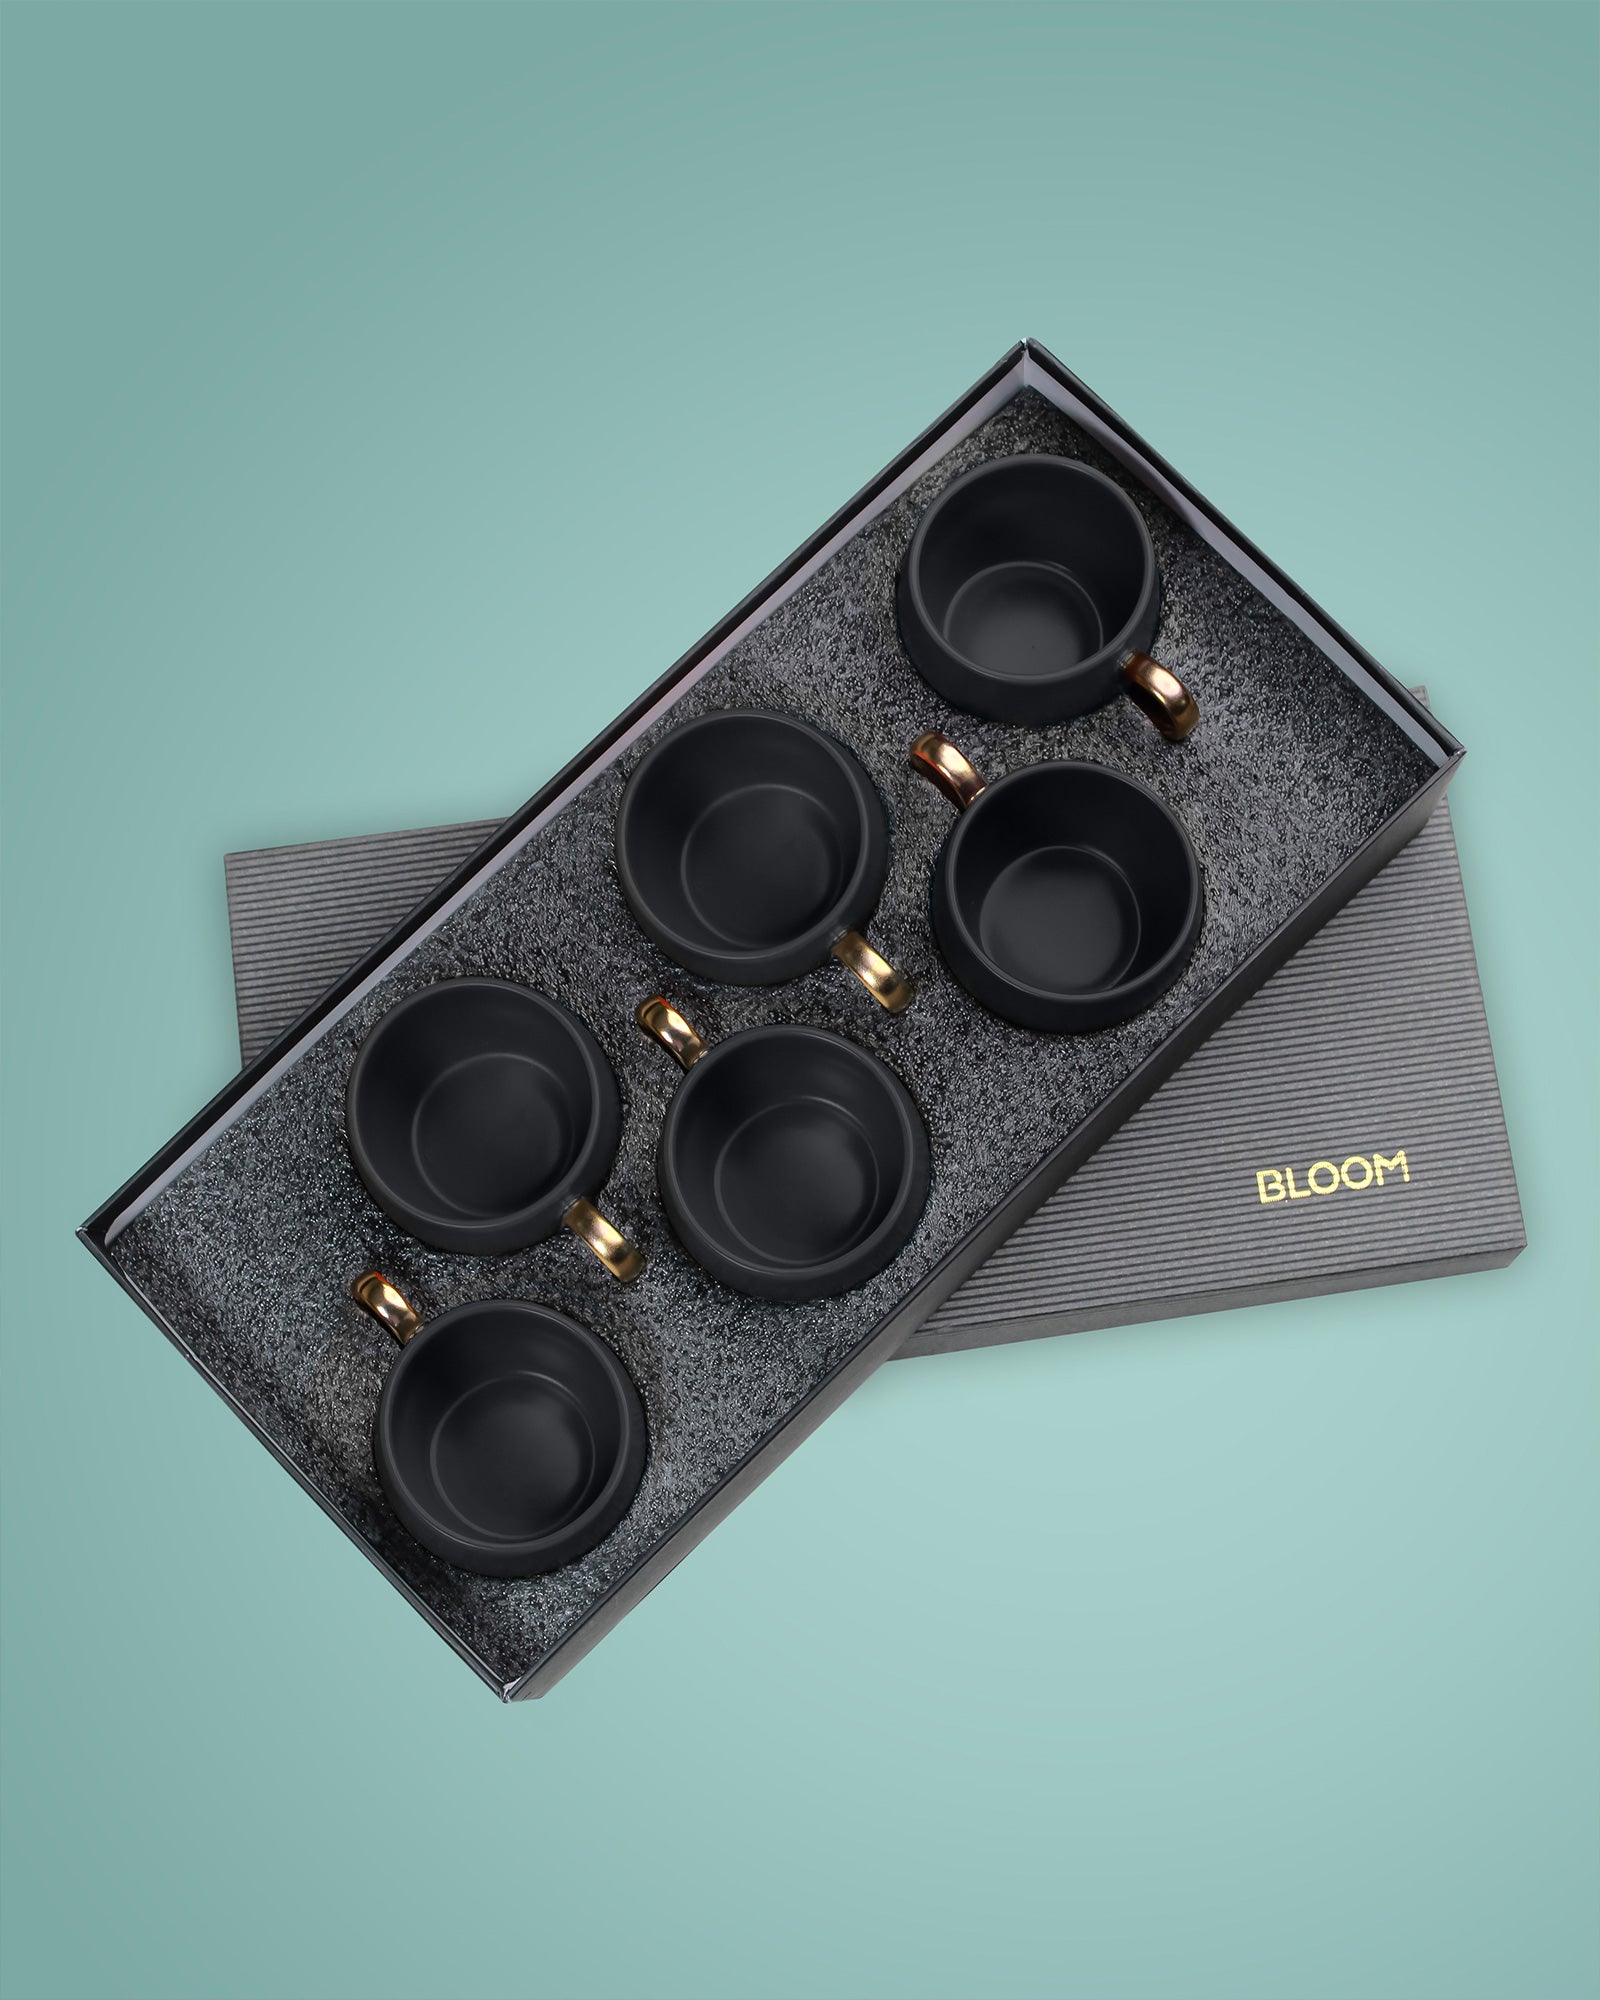 BLACK / Set of 6 * 220ml || Bloom luxurious Tea Mug | Golden handle